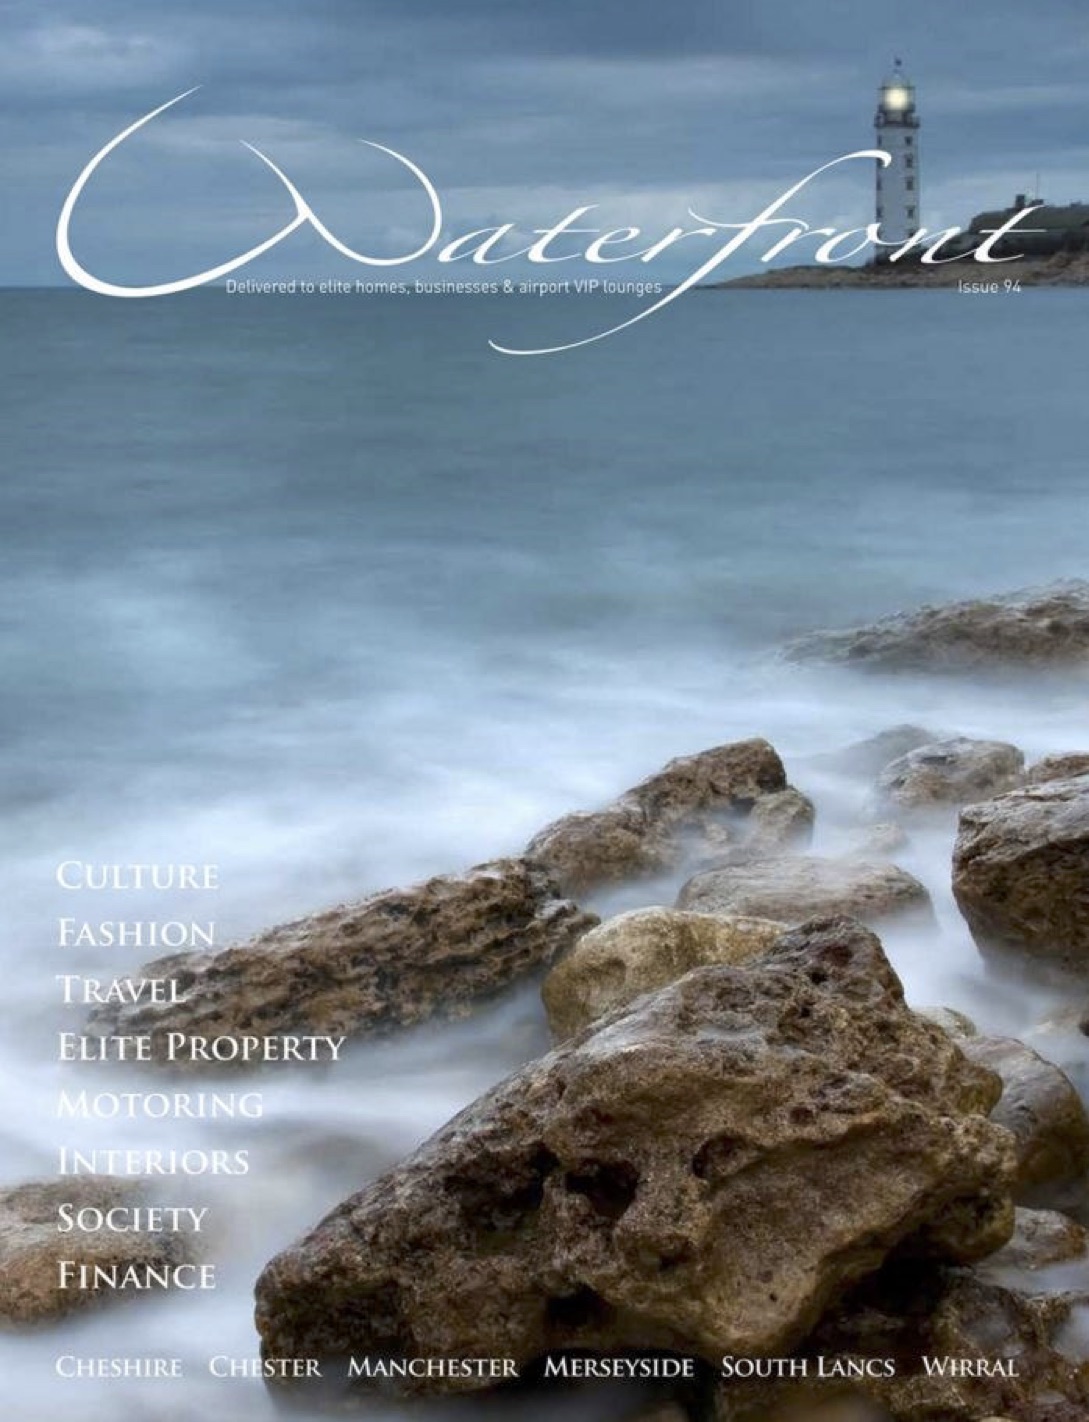 Waterfront Magazine – Chateau near Saint Tropez